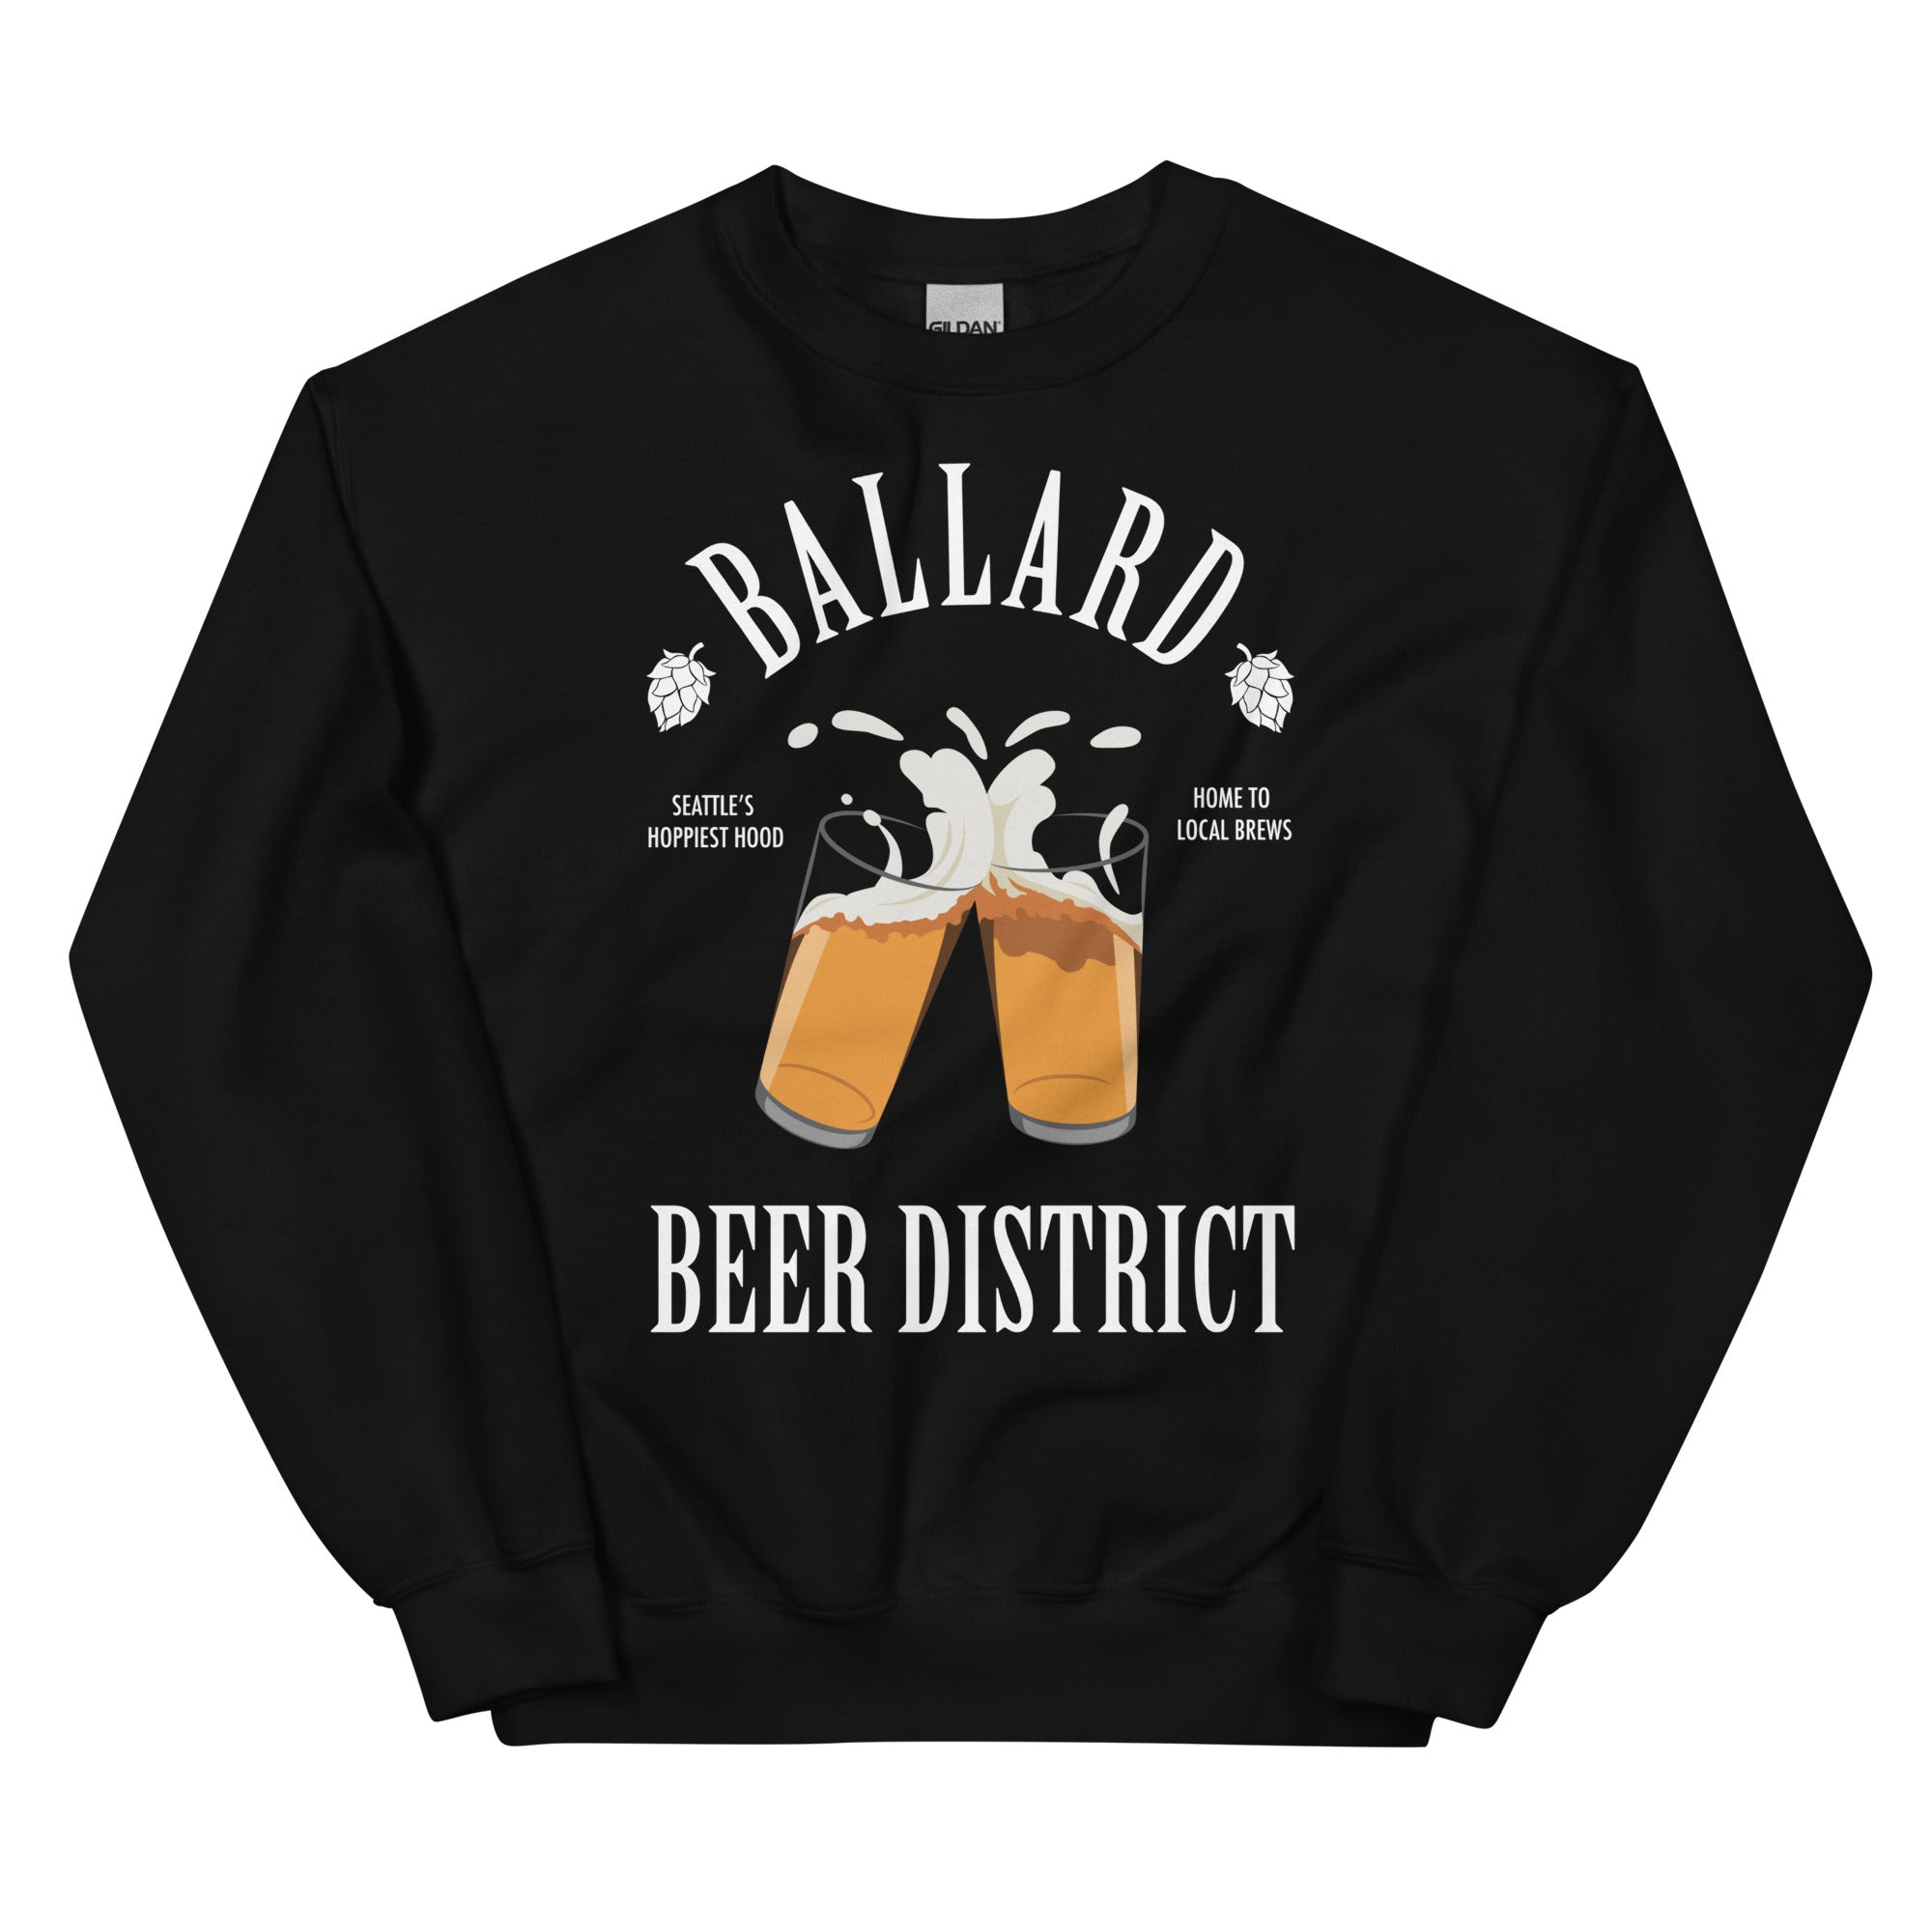 Beer District Crew Neck Sweatshirt - Ballard | Seattle, WA